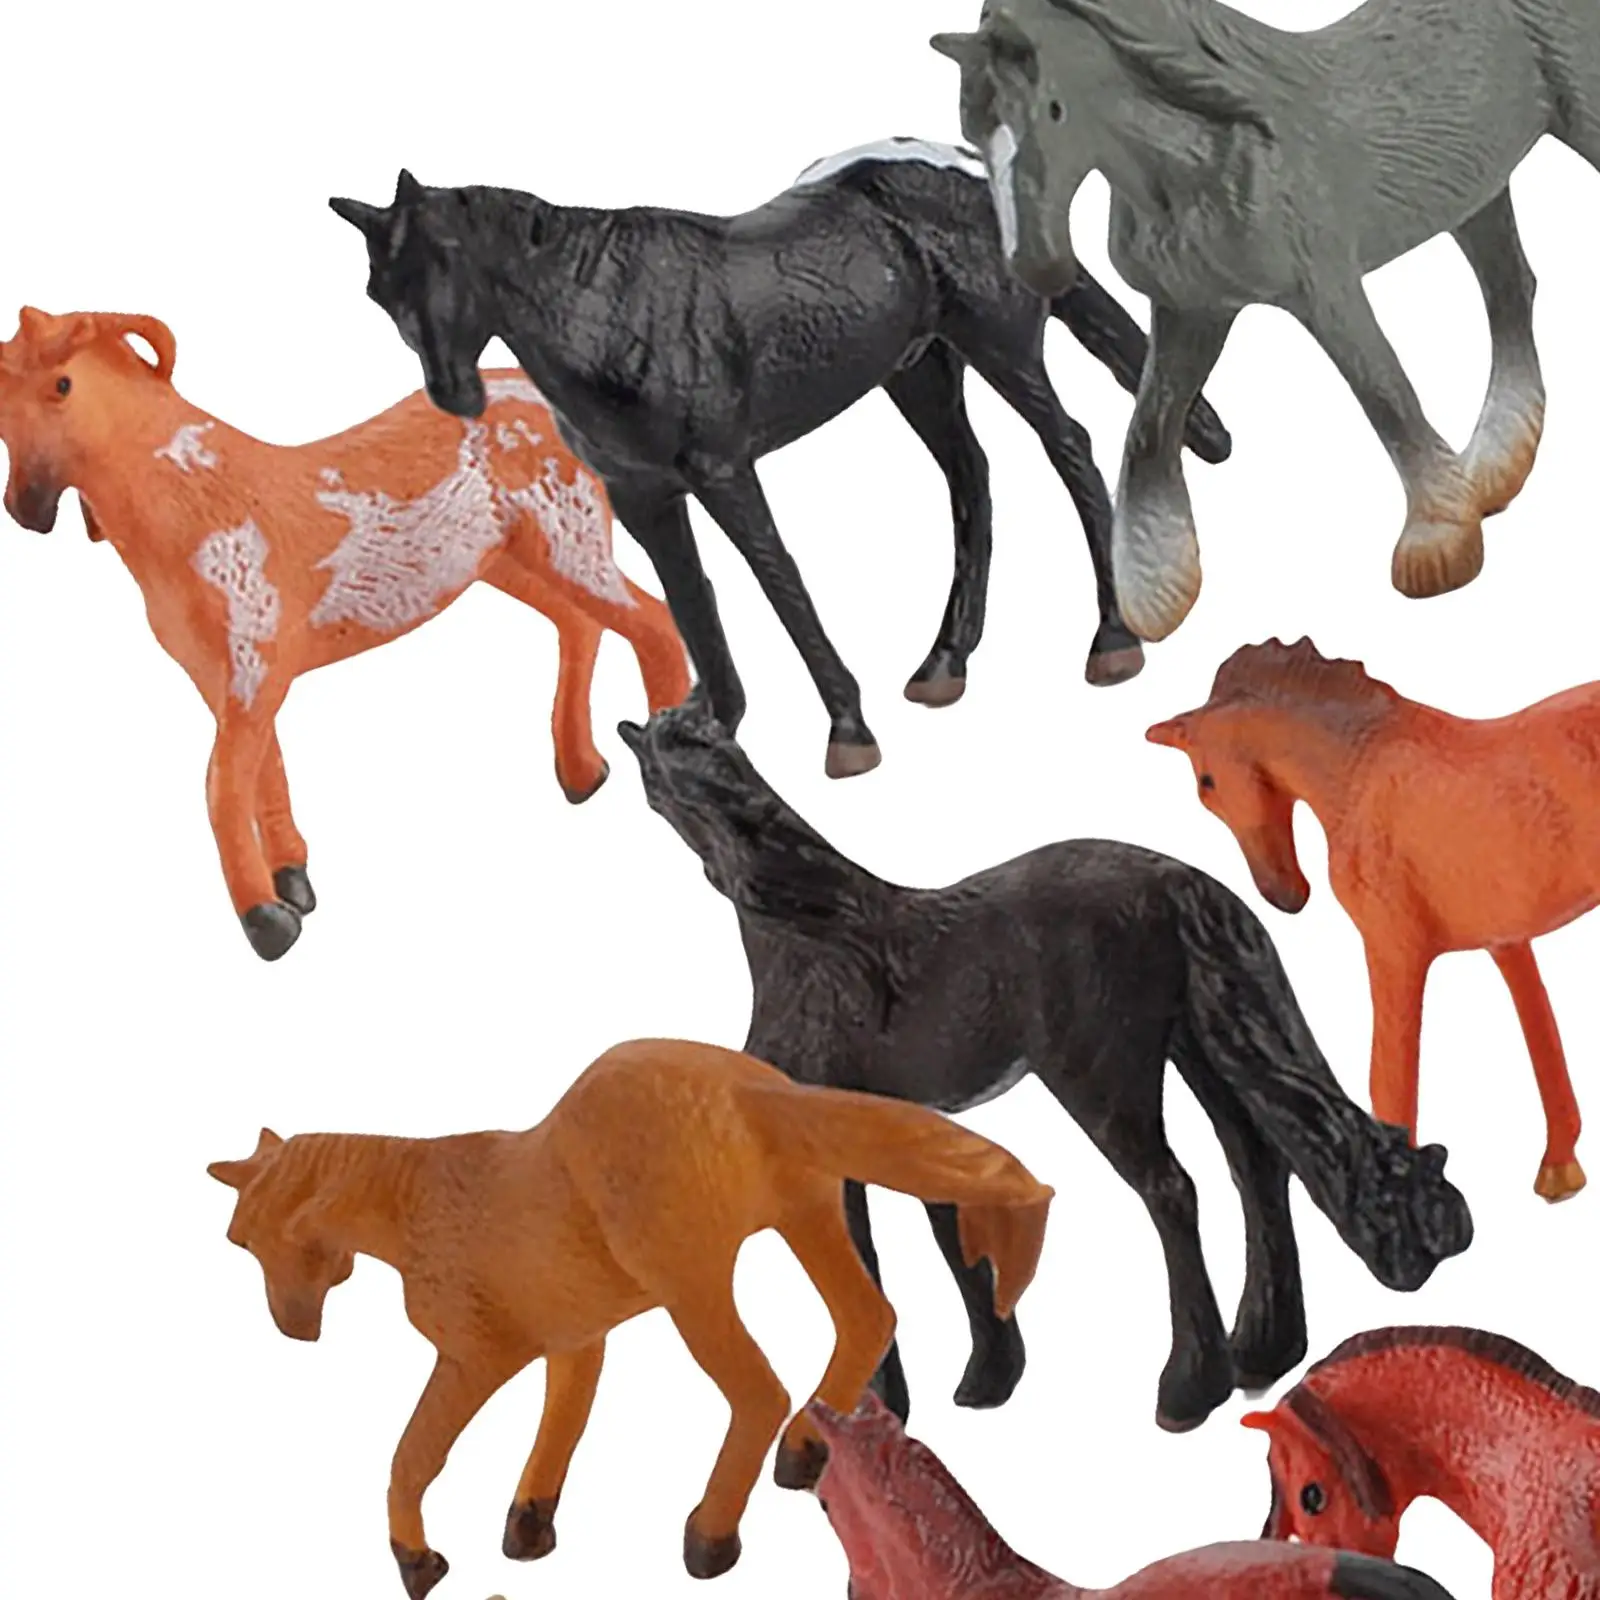 18 Pieces Miniature Animal Models for DIY Projects Kindergarten Girls Boys